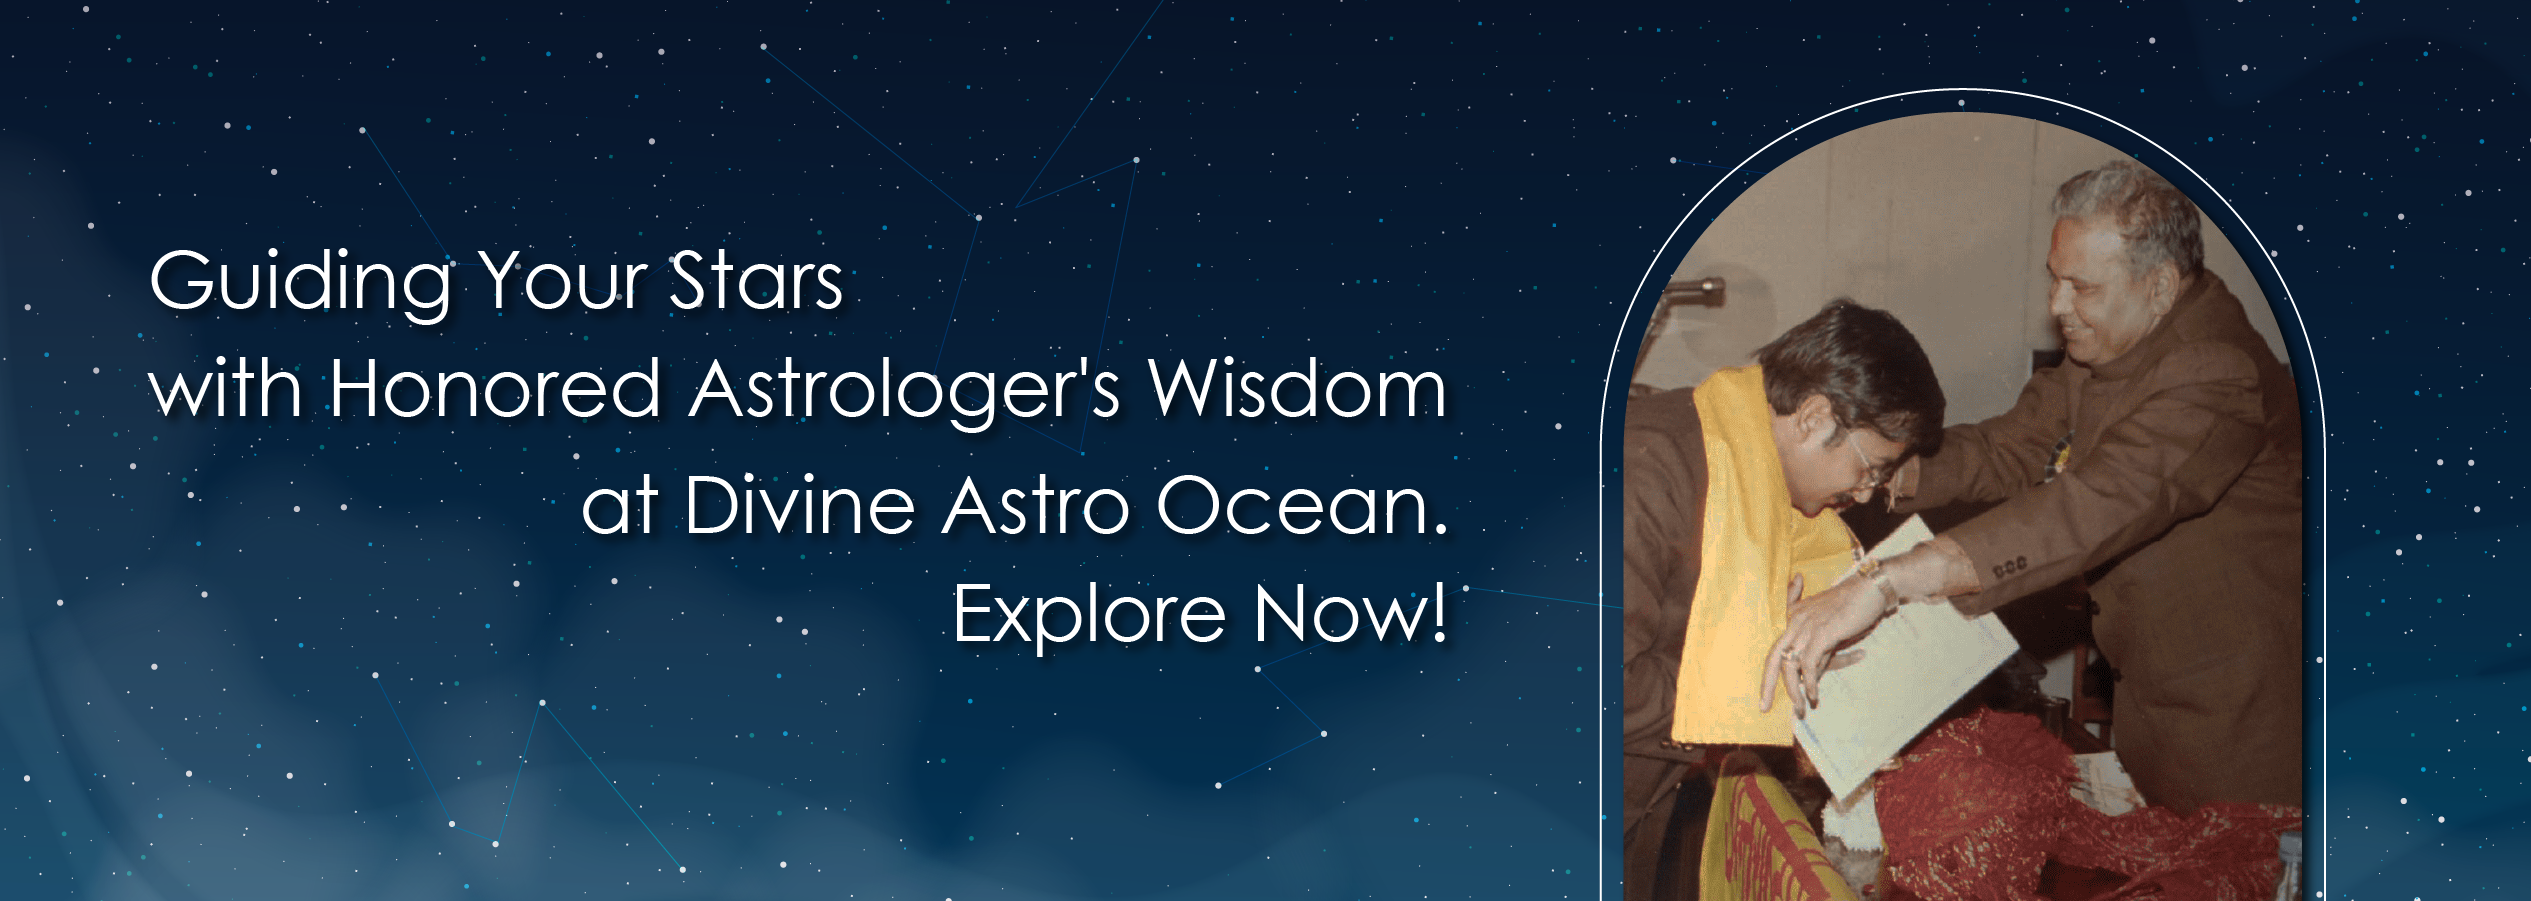 astrology-banner2